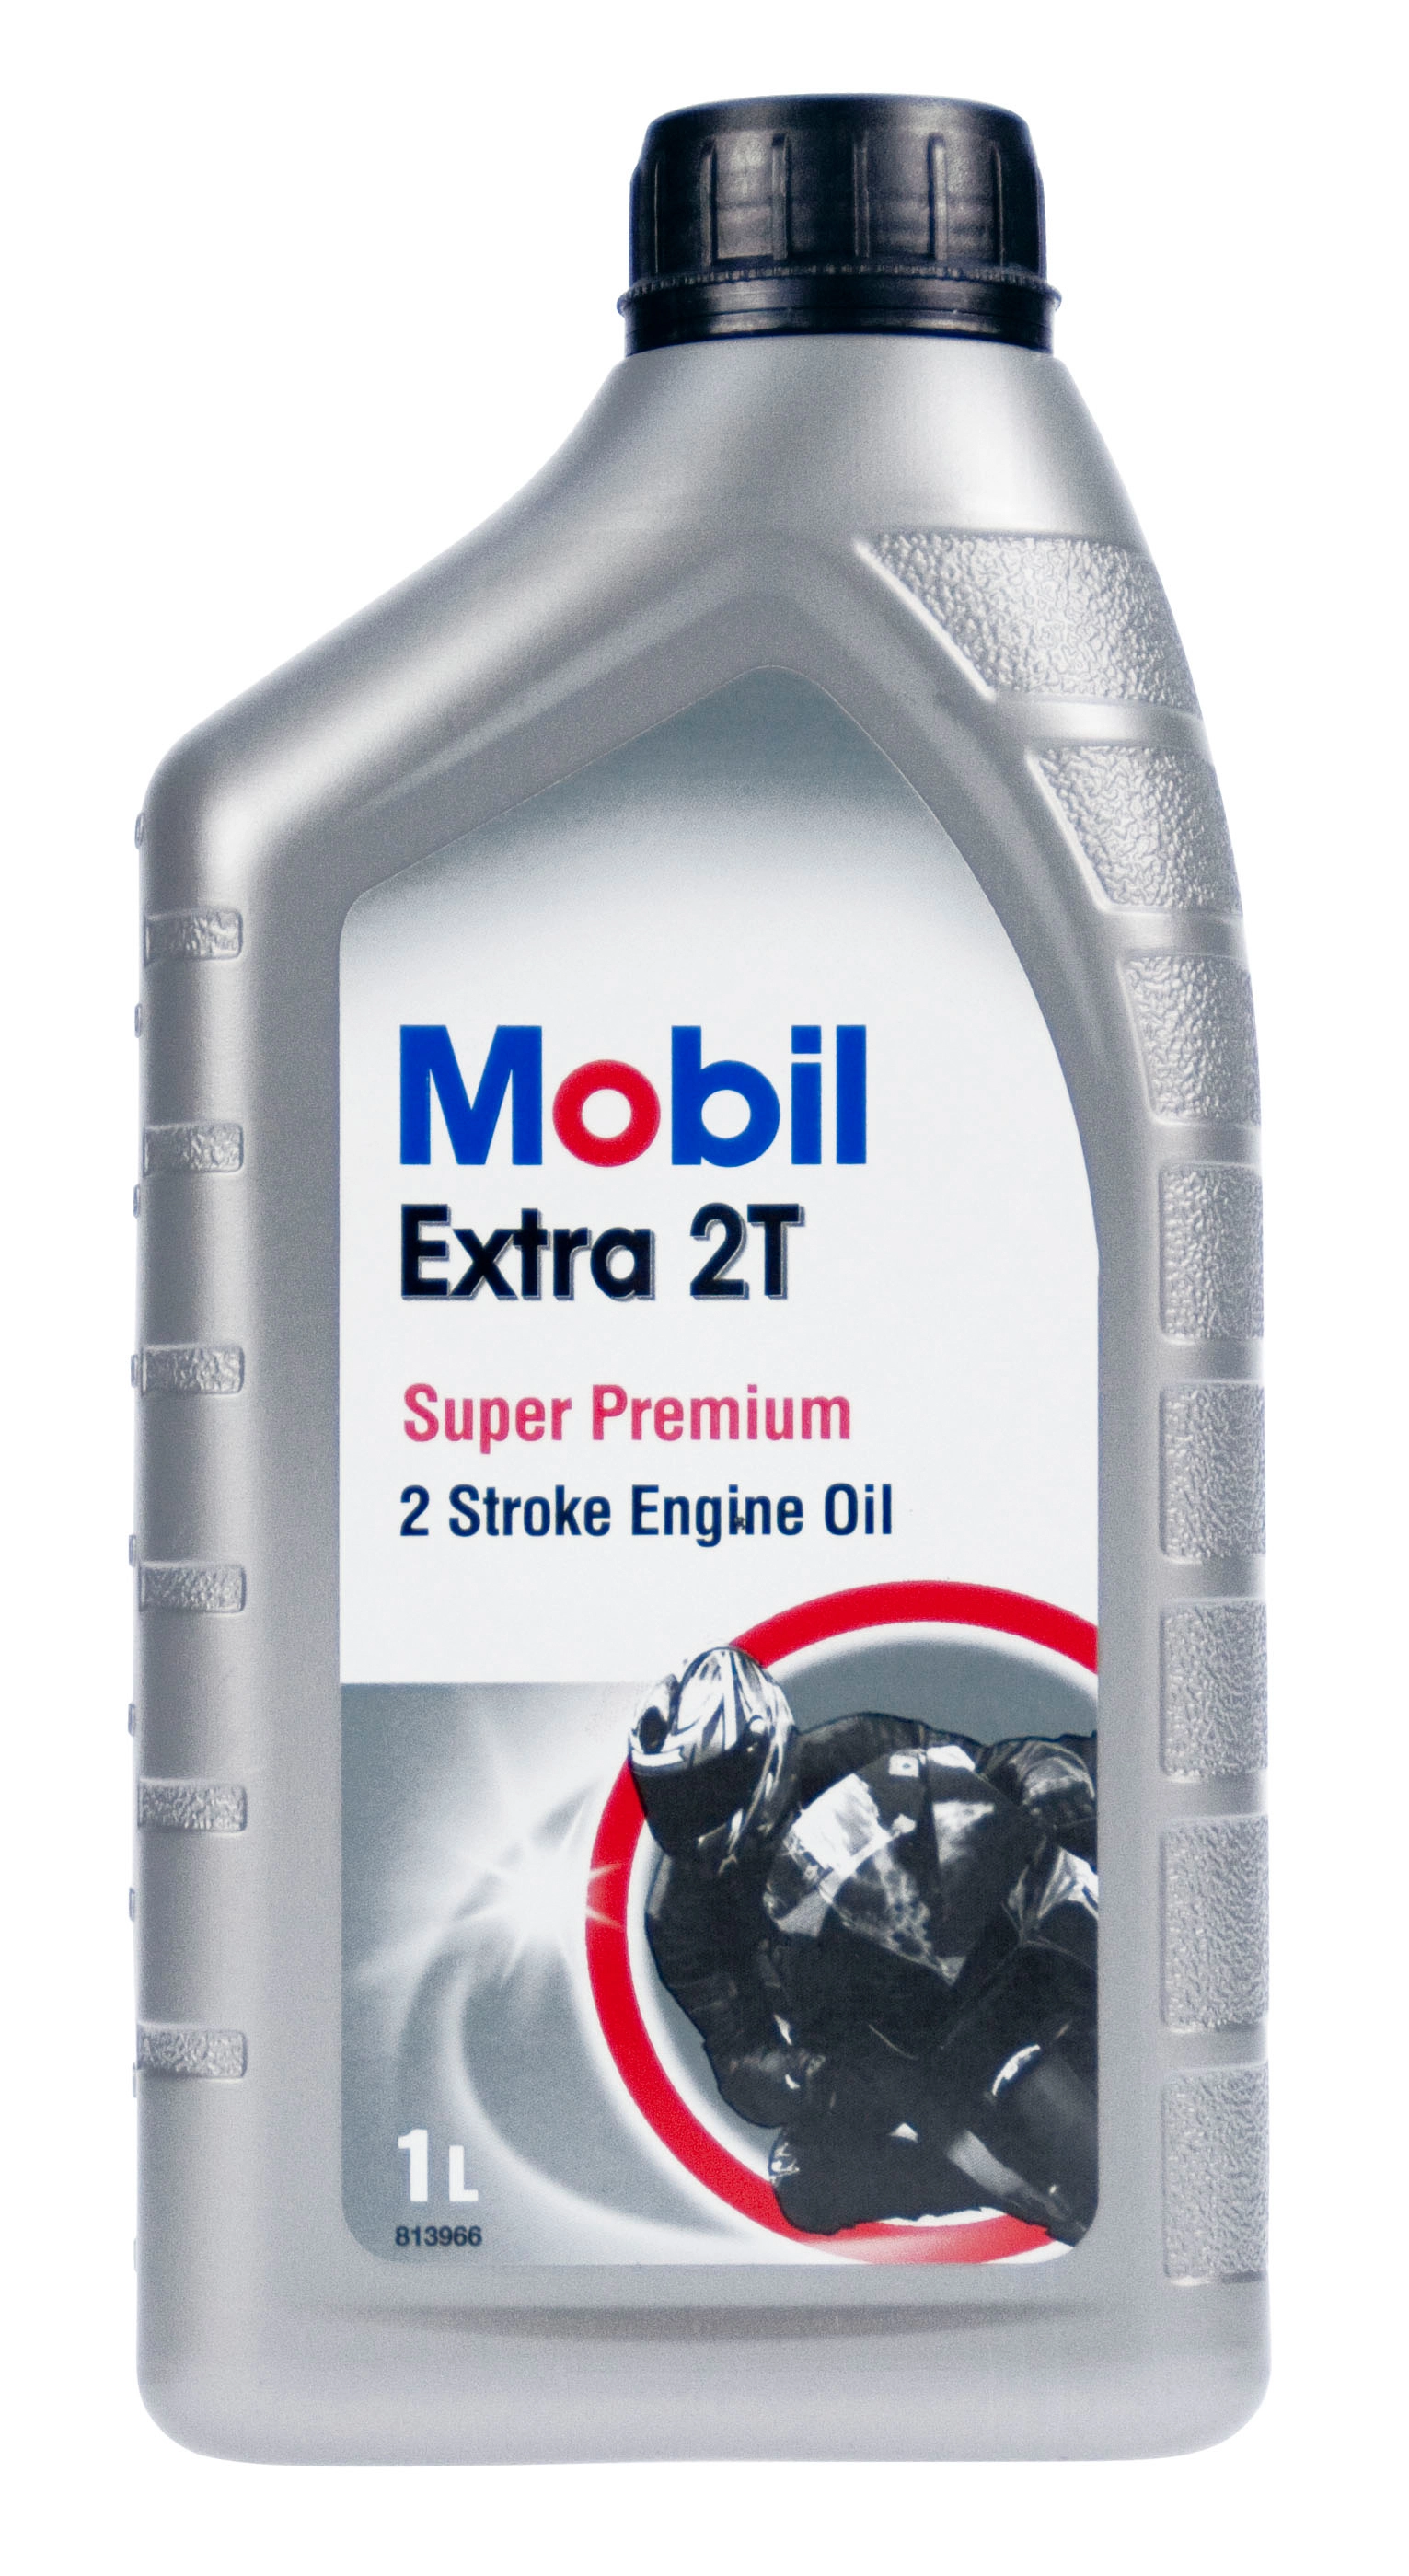 Mobil Extra 2T Motoröl 1 l kaufen bei OBI